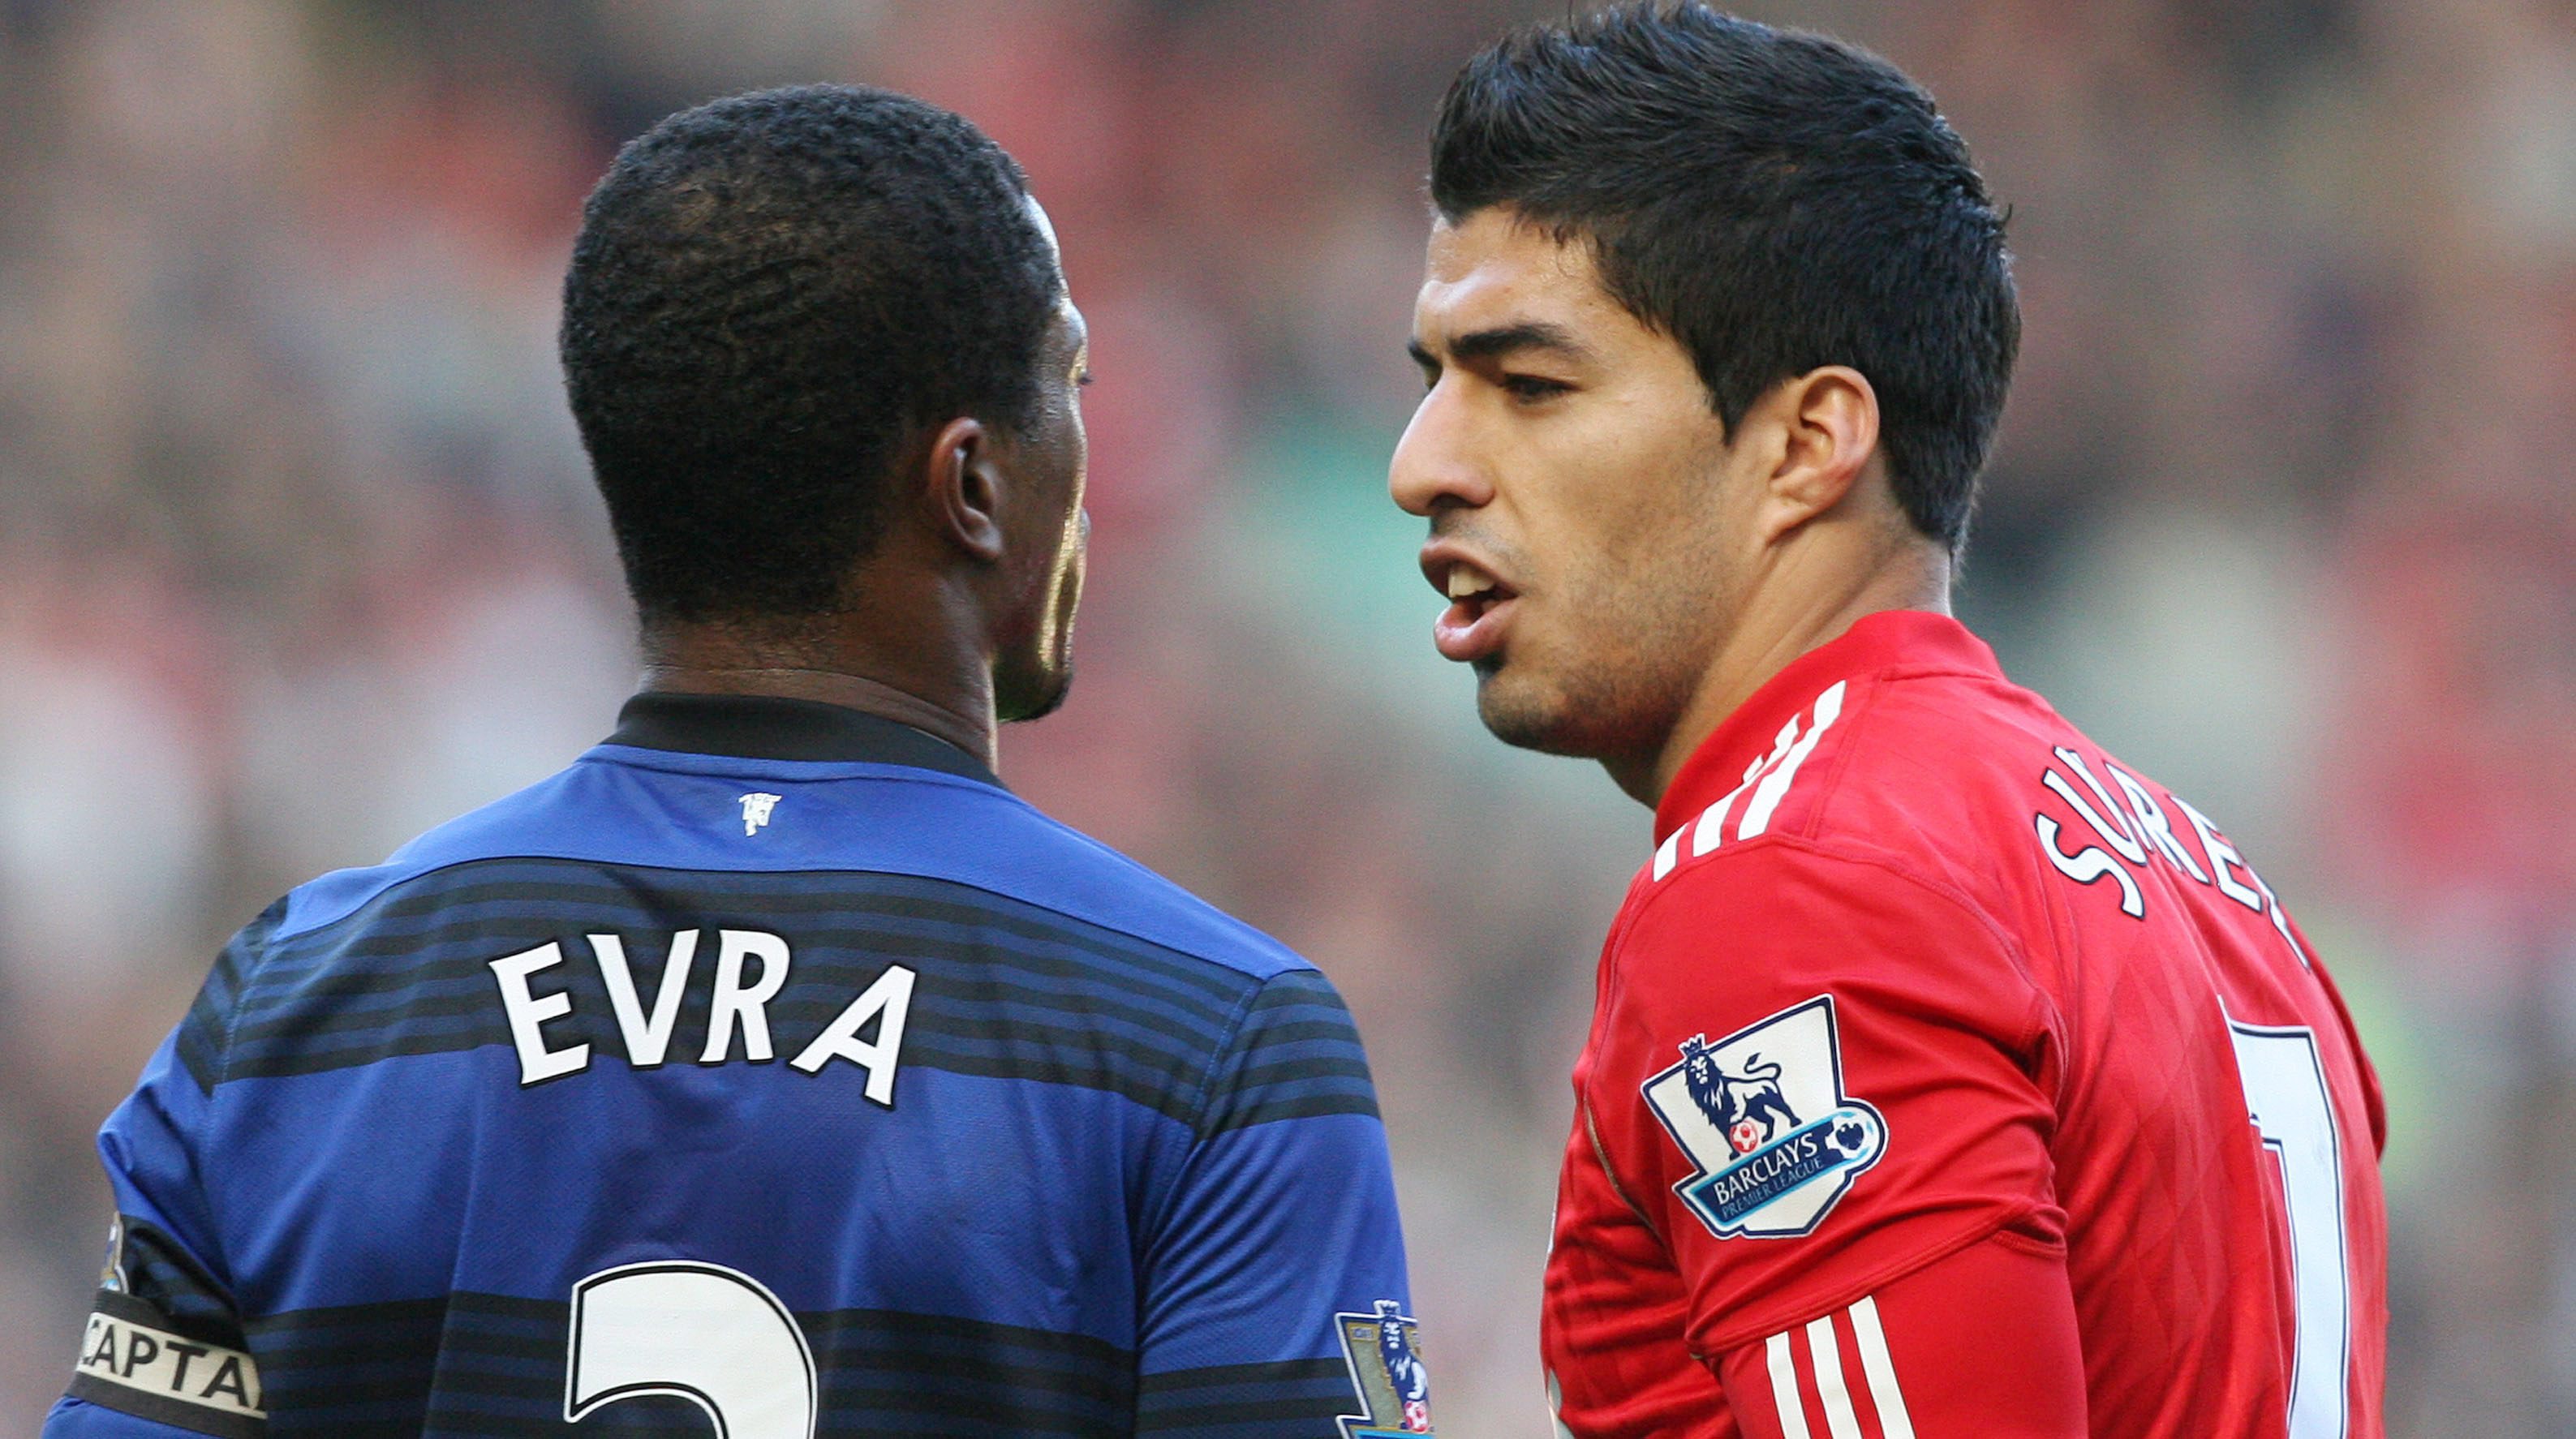 Luis Suarez racially abused Patrice Evra in the Premier League. Photo: EPA